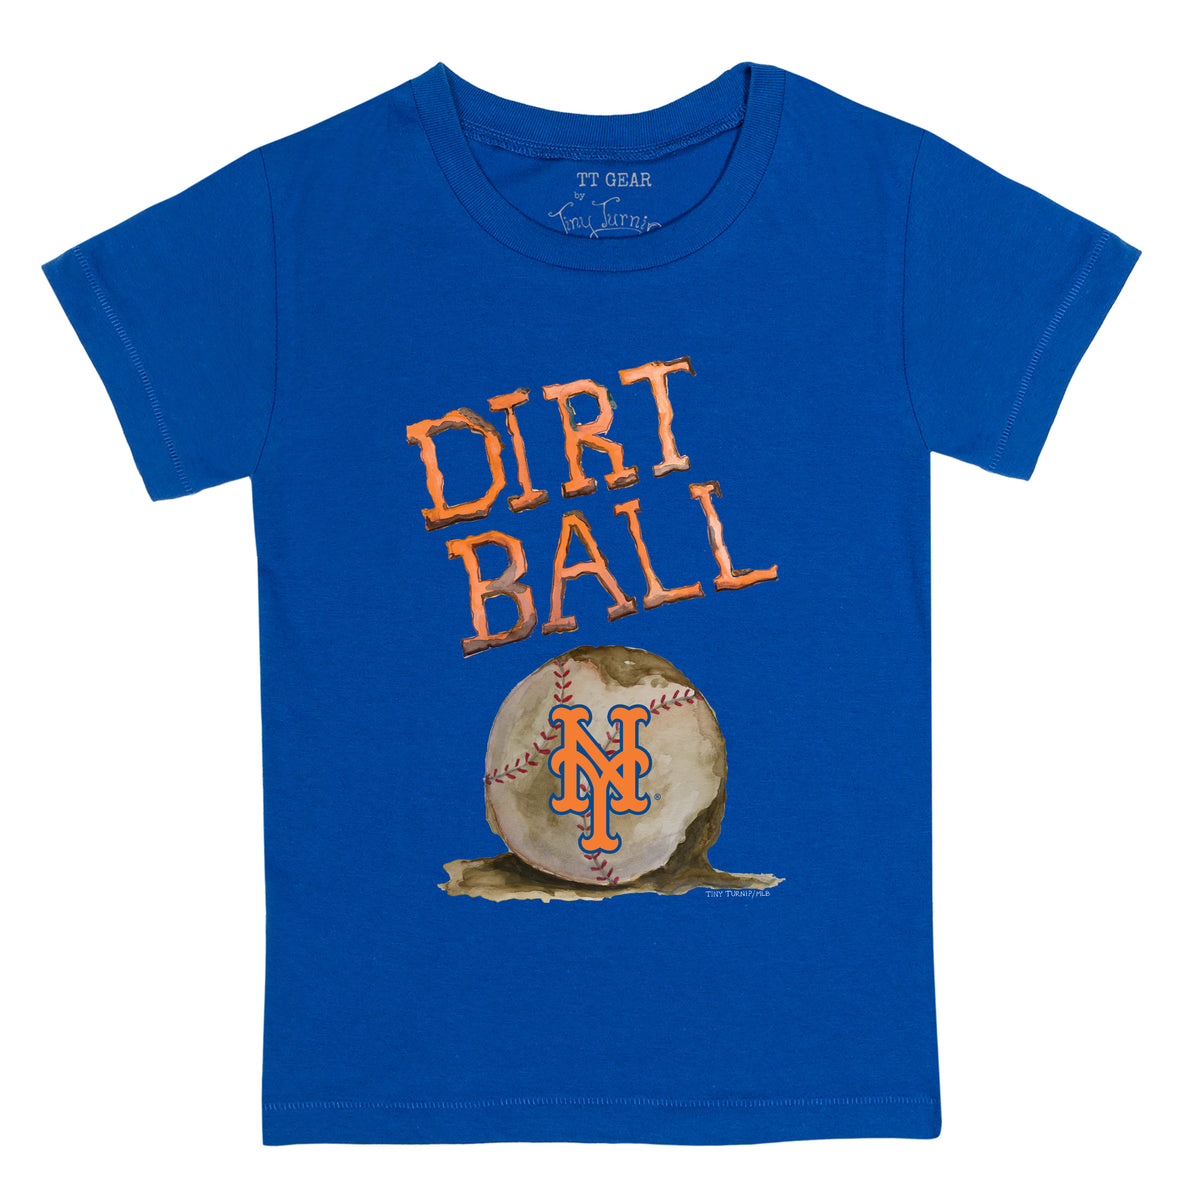 Youth Tiny Turnip Royal New York Mets Stitched Baseball T-Shirt Size: Extra Large